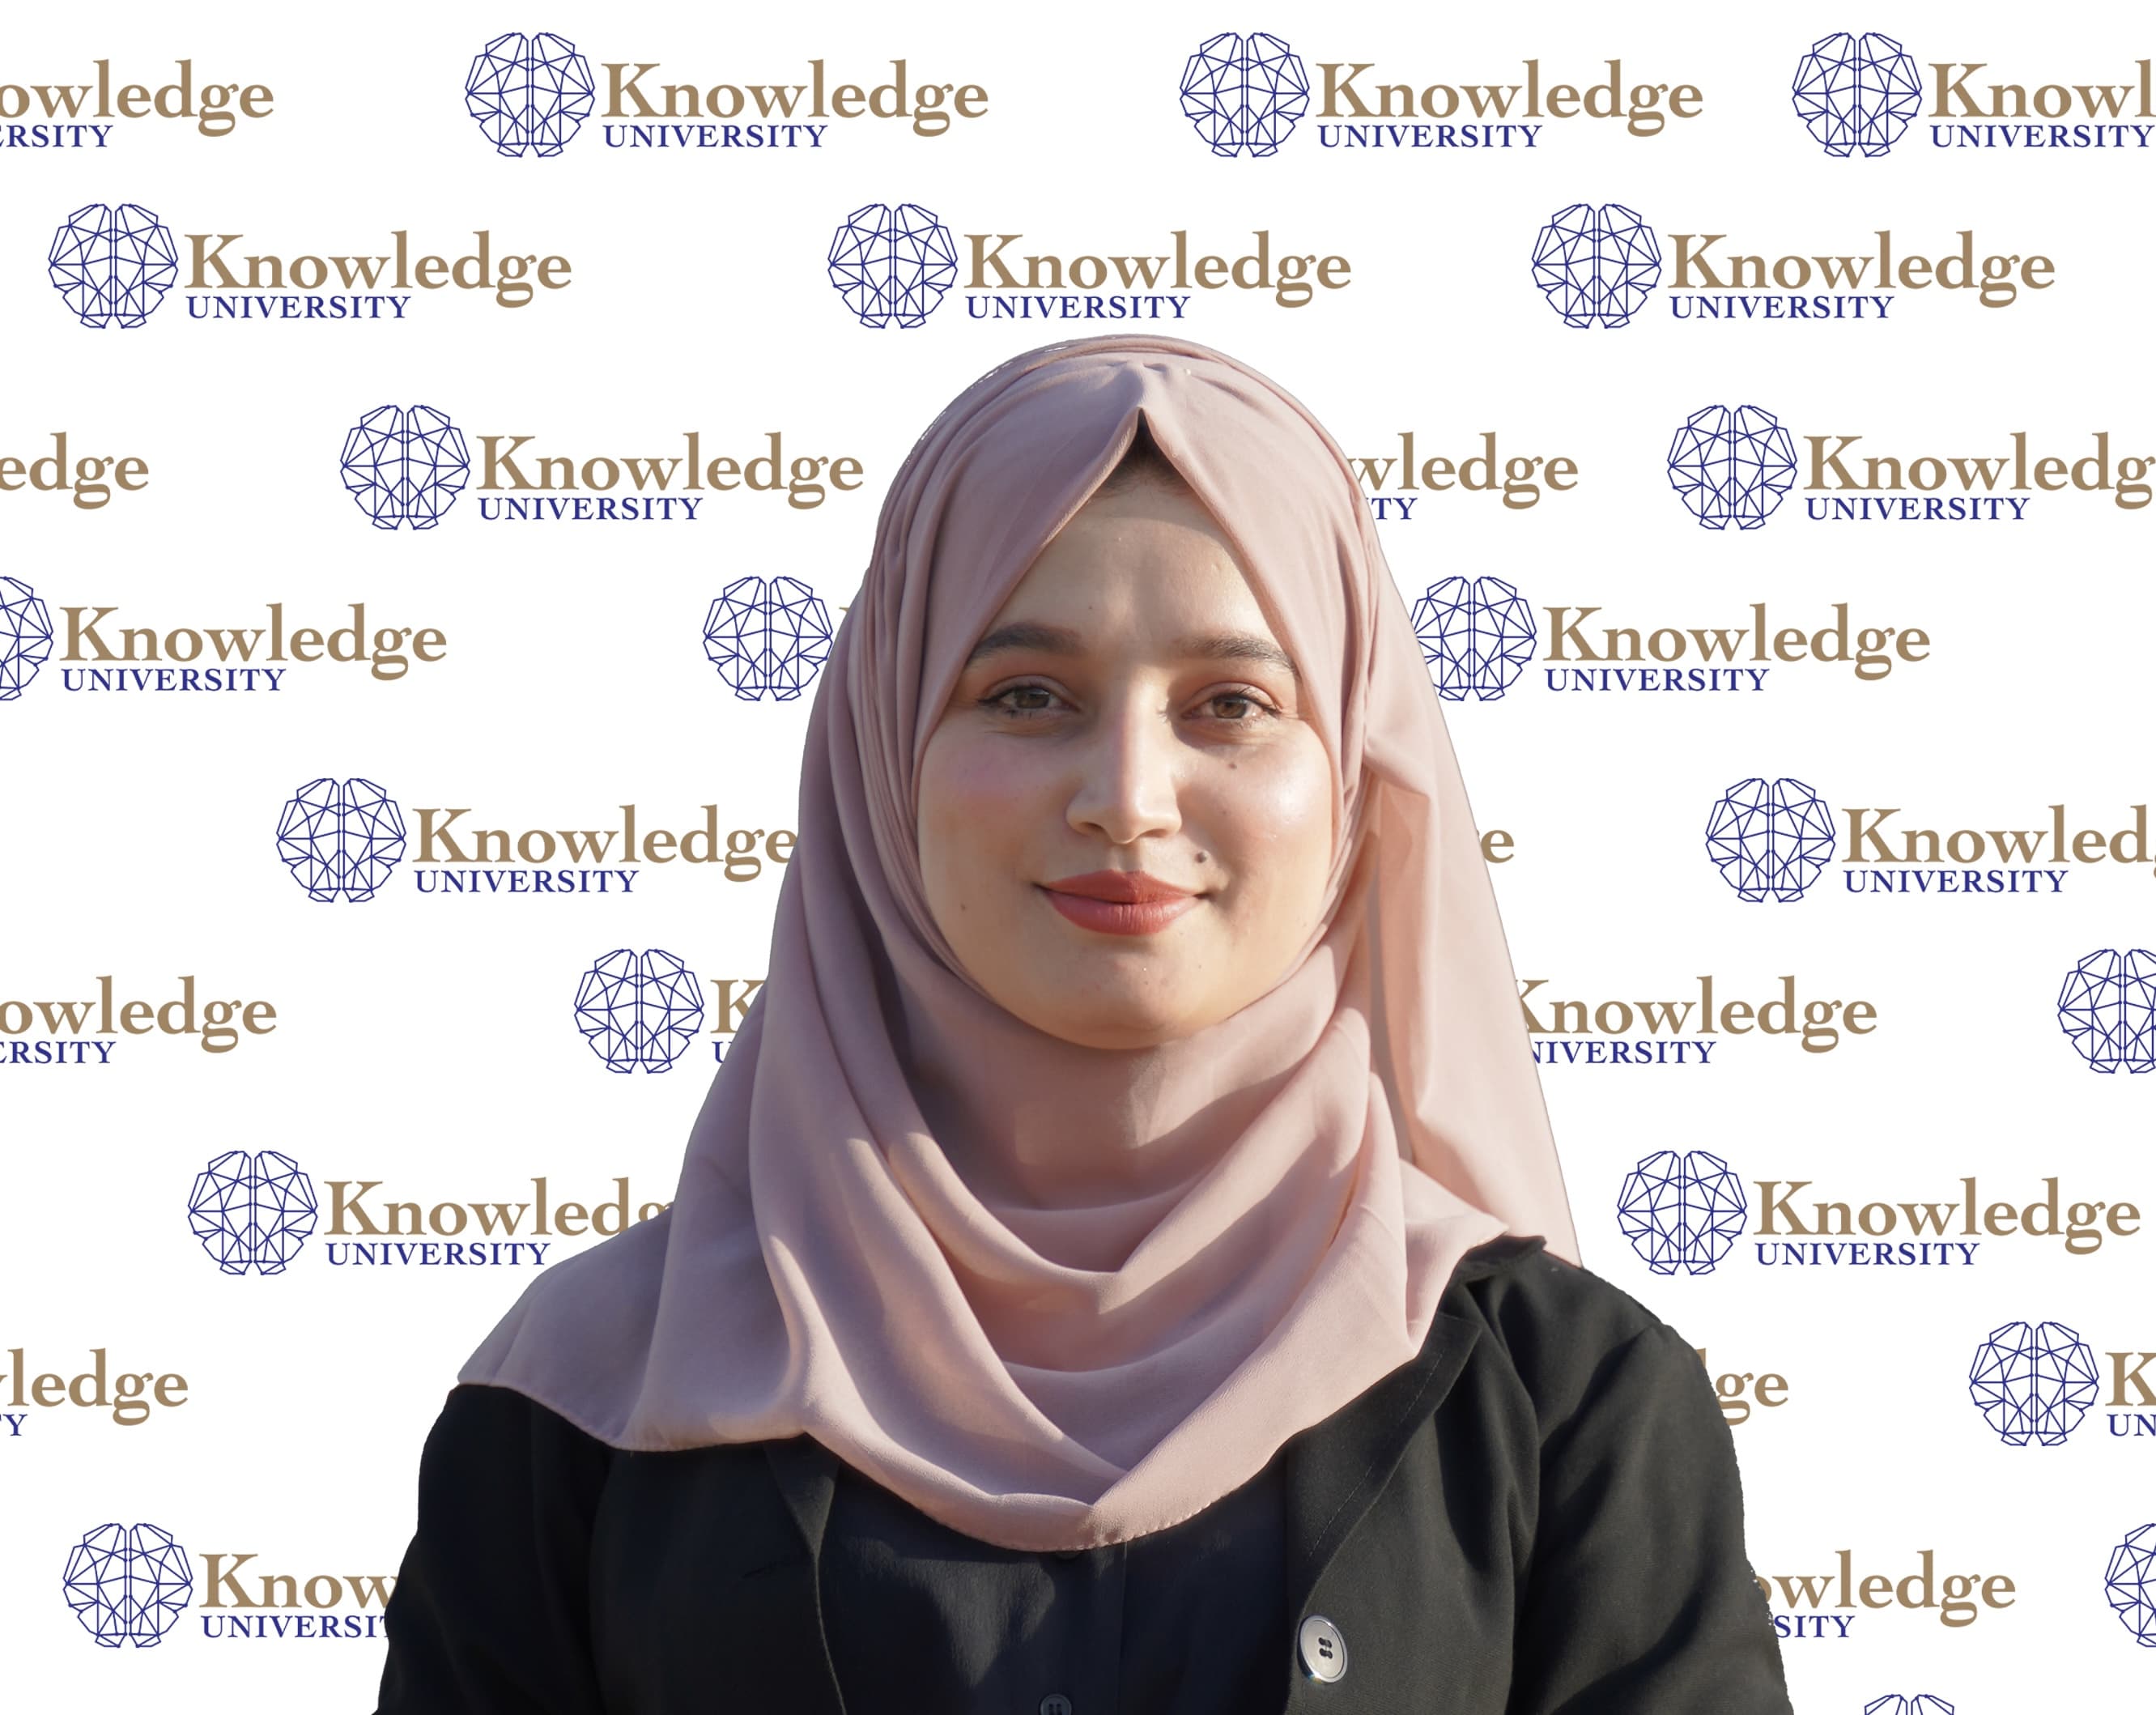 Knowledge University administrative staff, Aya Hassanian Ali